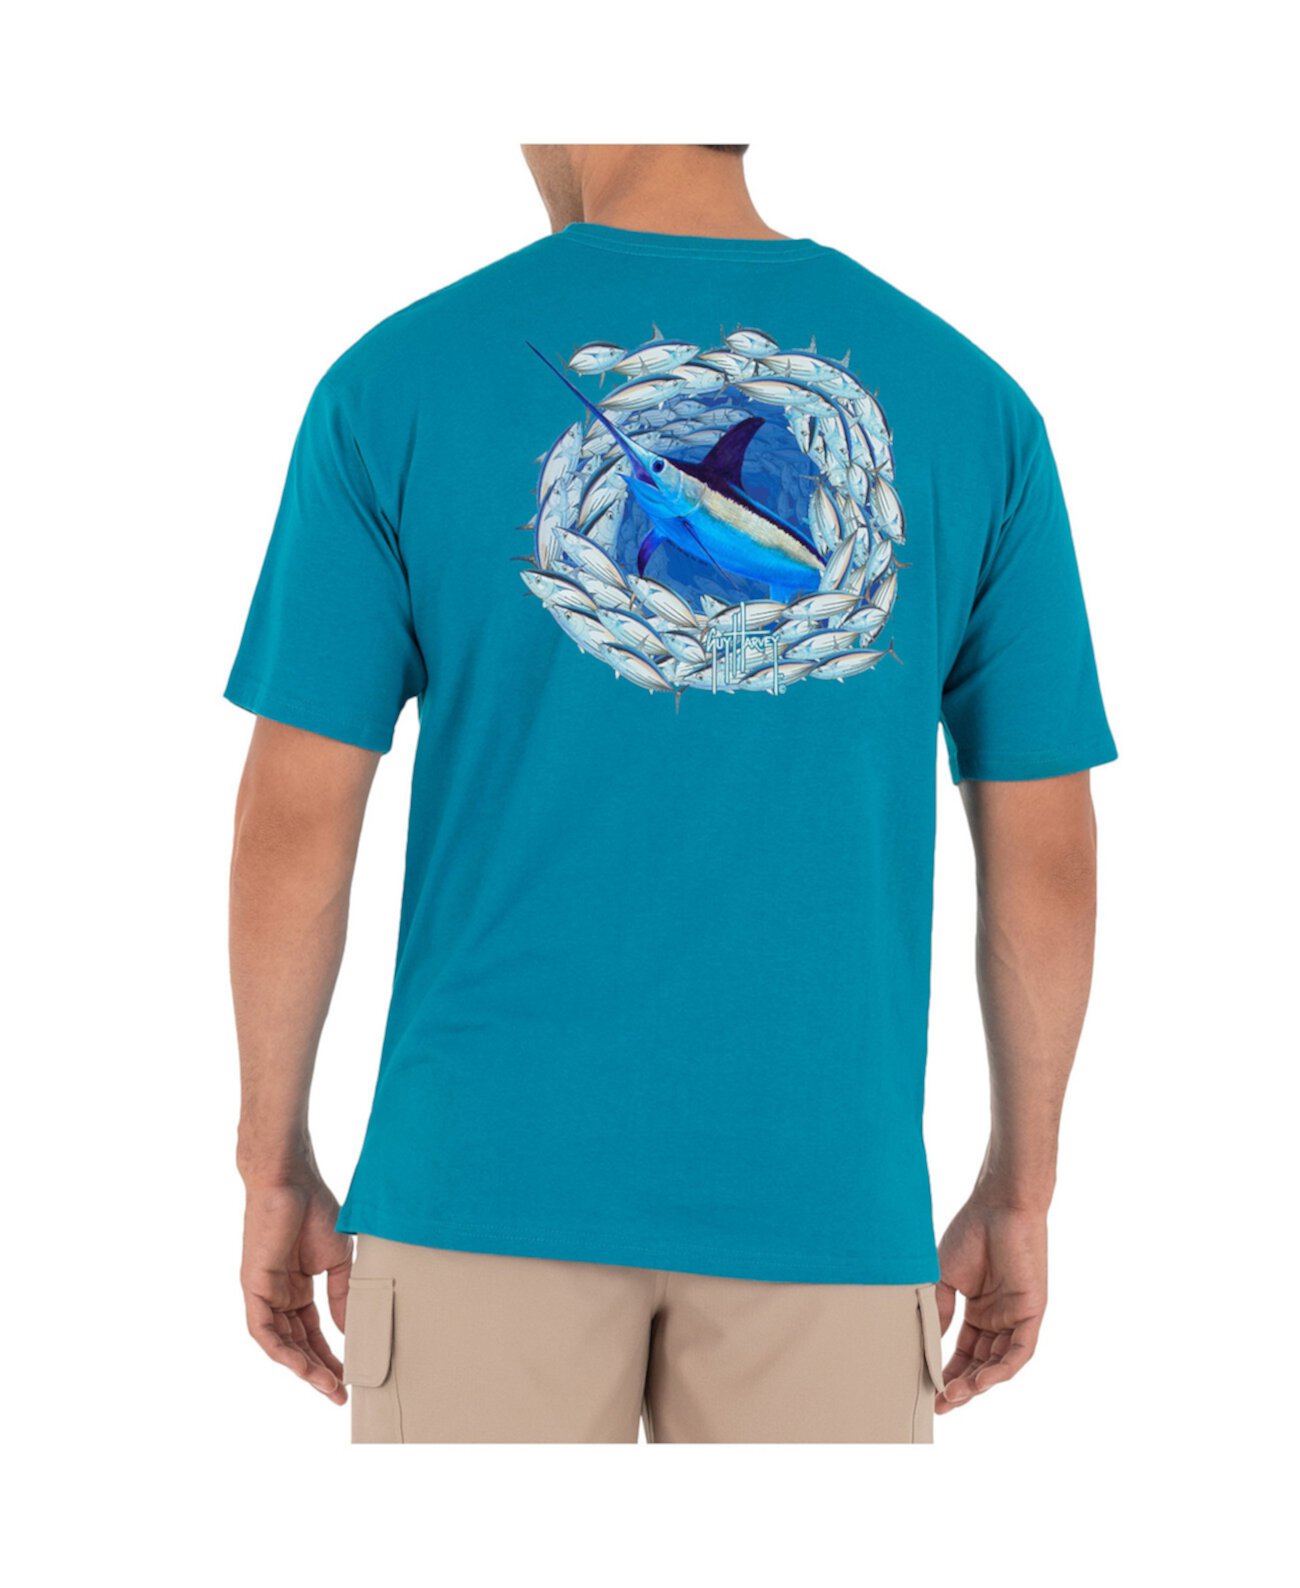 Мужская футболка Offshore Haul Swordfish Guy Harvey